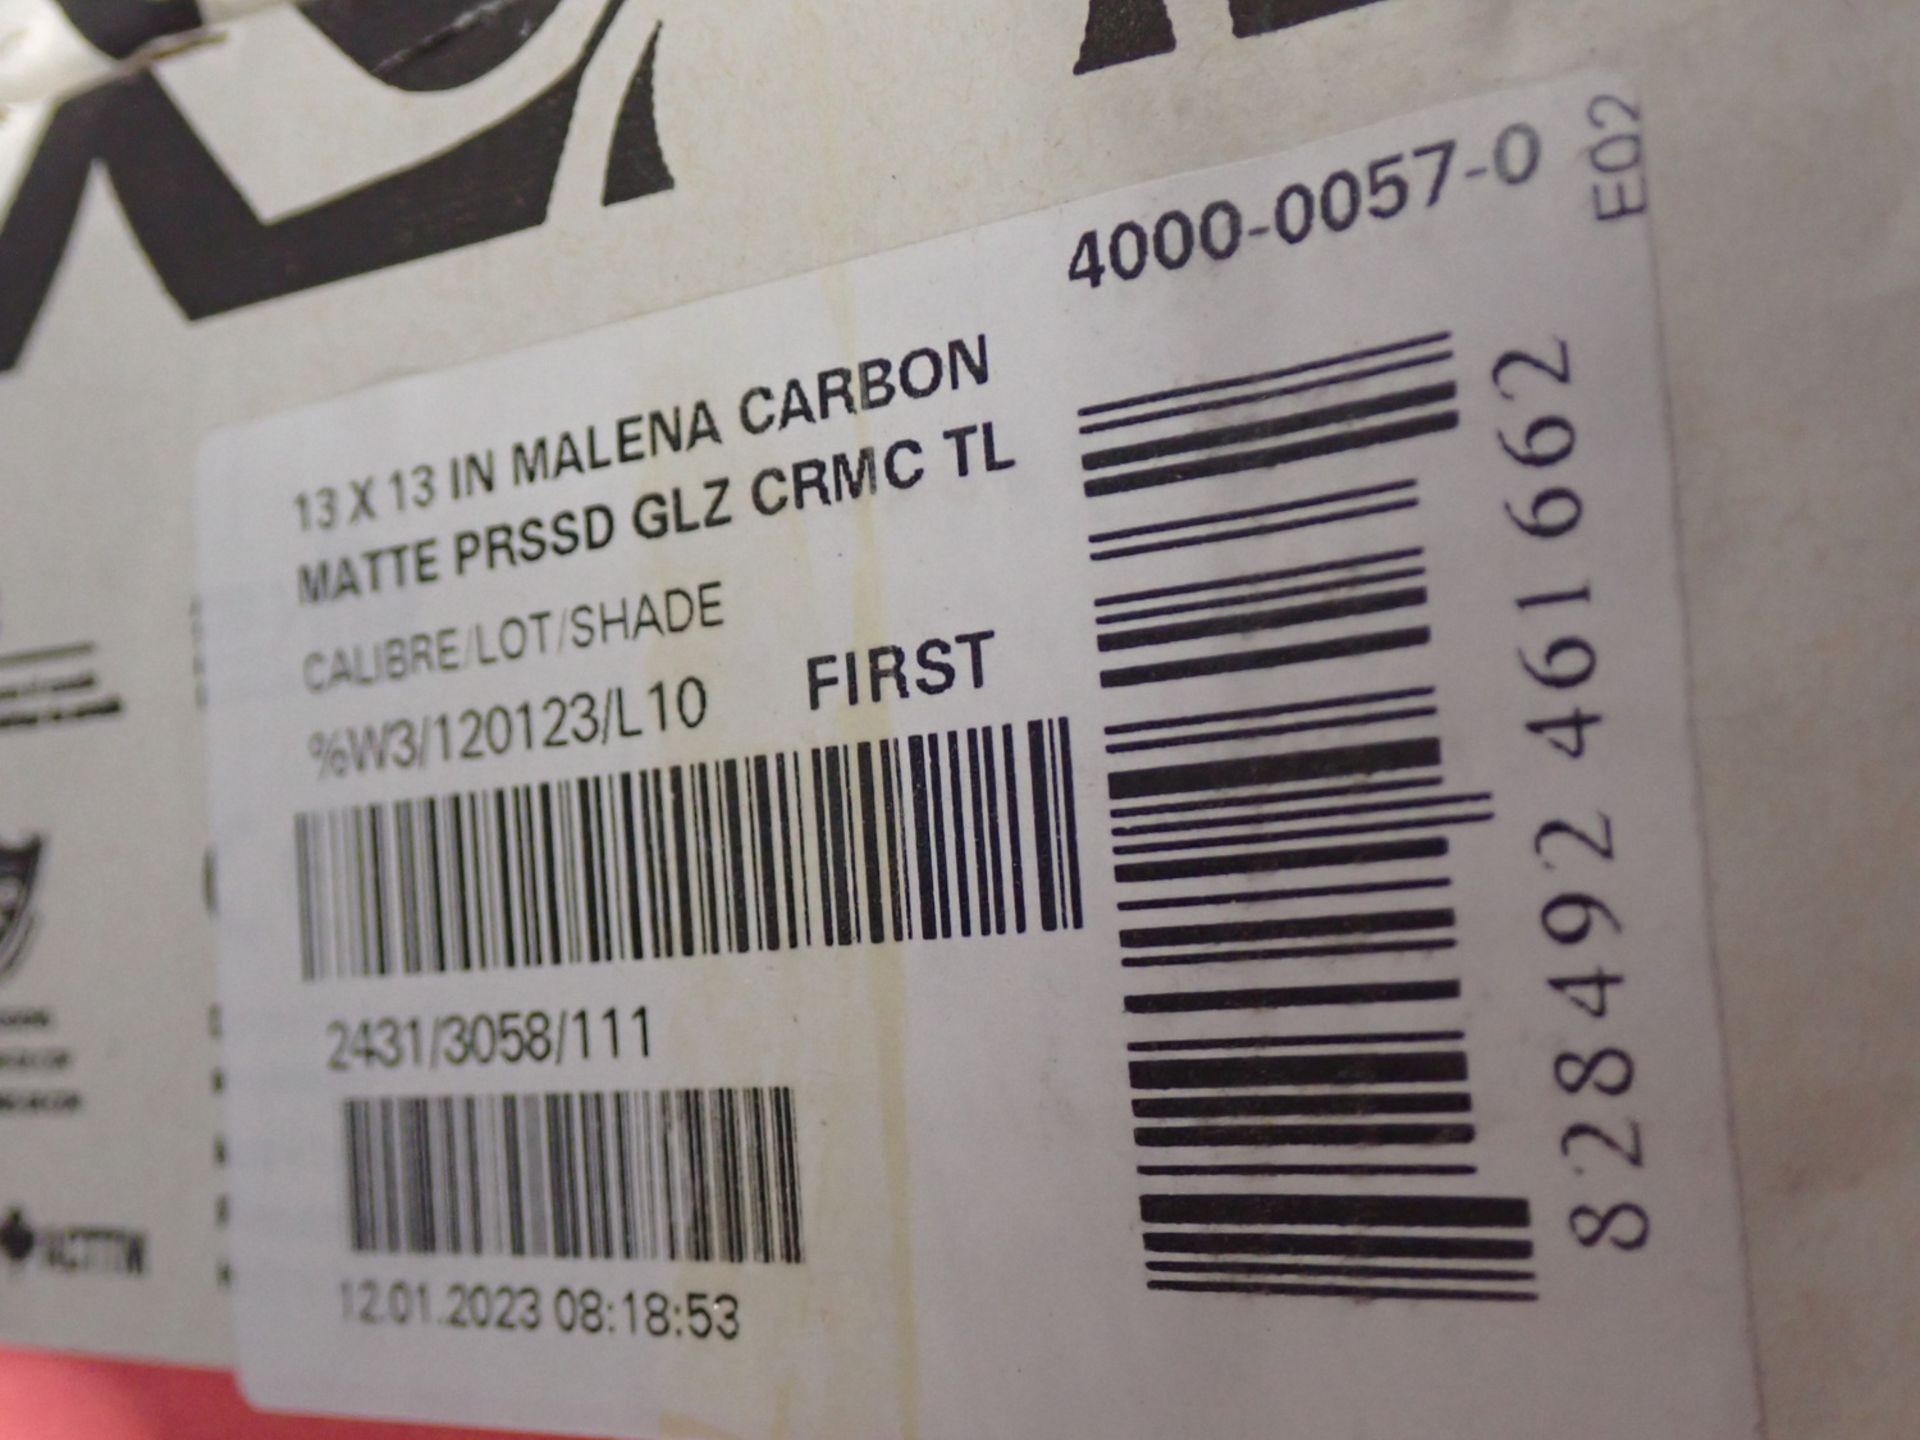 BOXES - MALENA CARBON 13 X 13" CERAMIC TILES (11 PCS/BOX) - Image 3 of 3